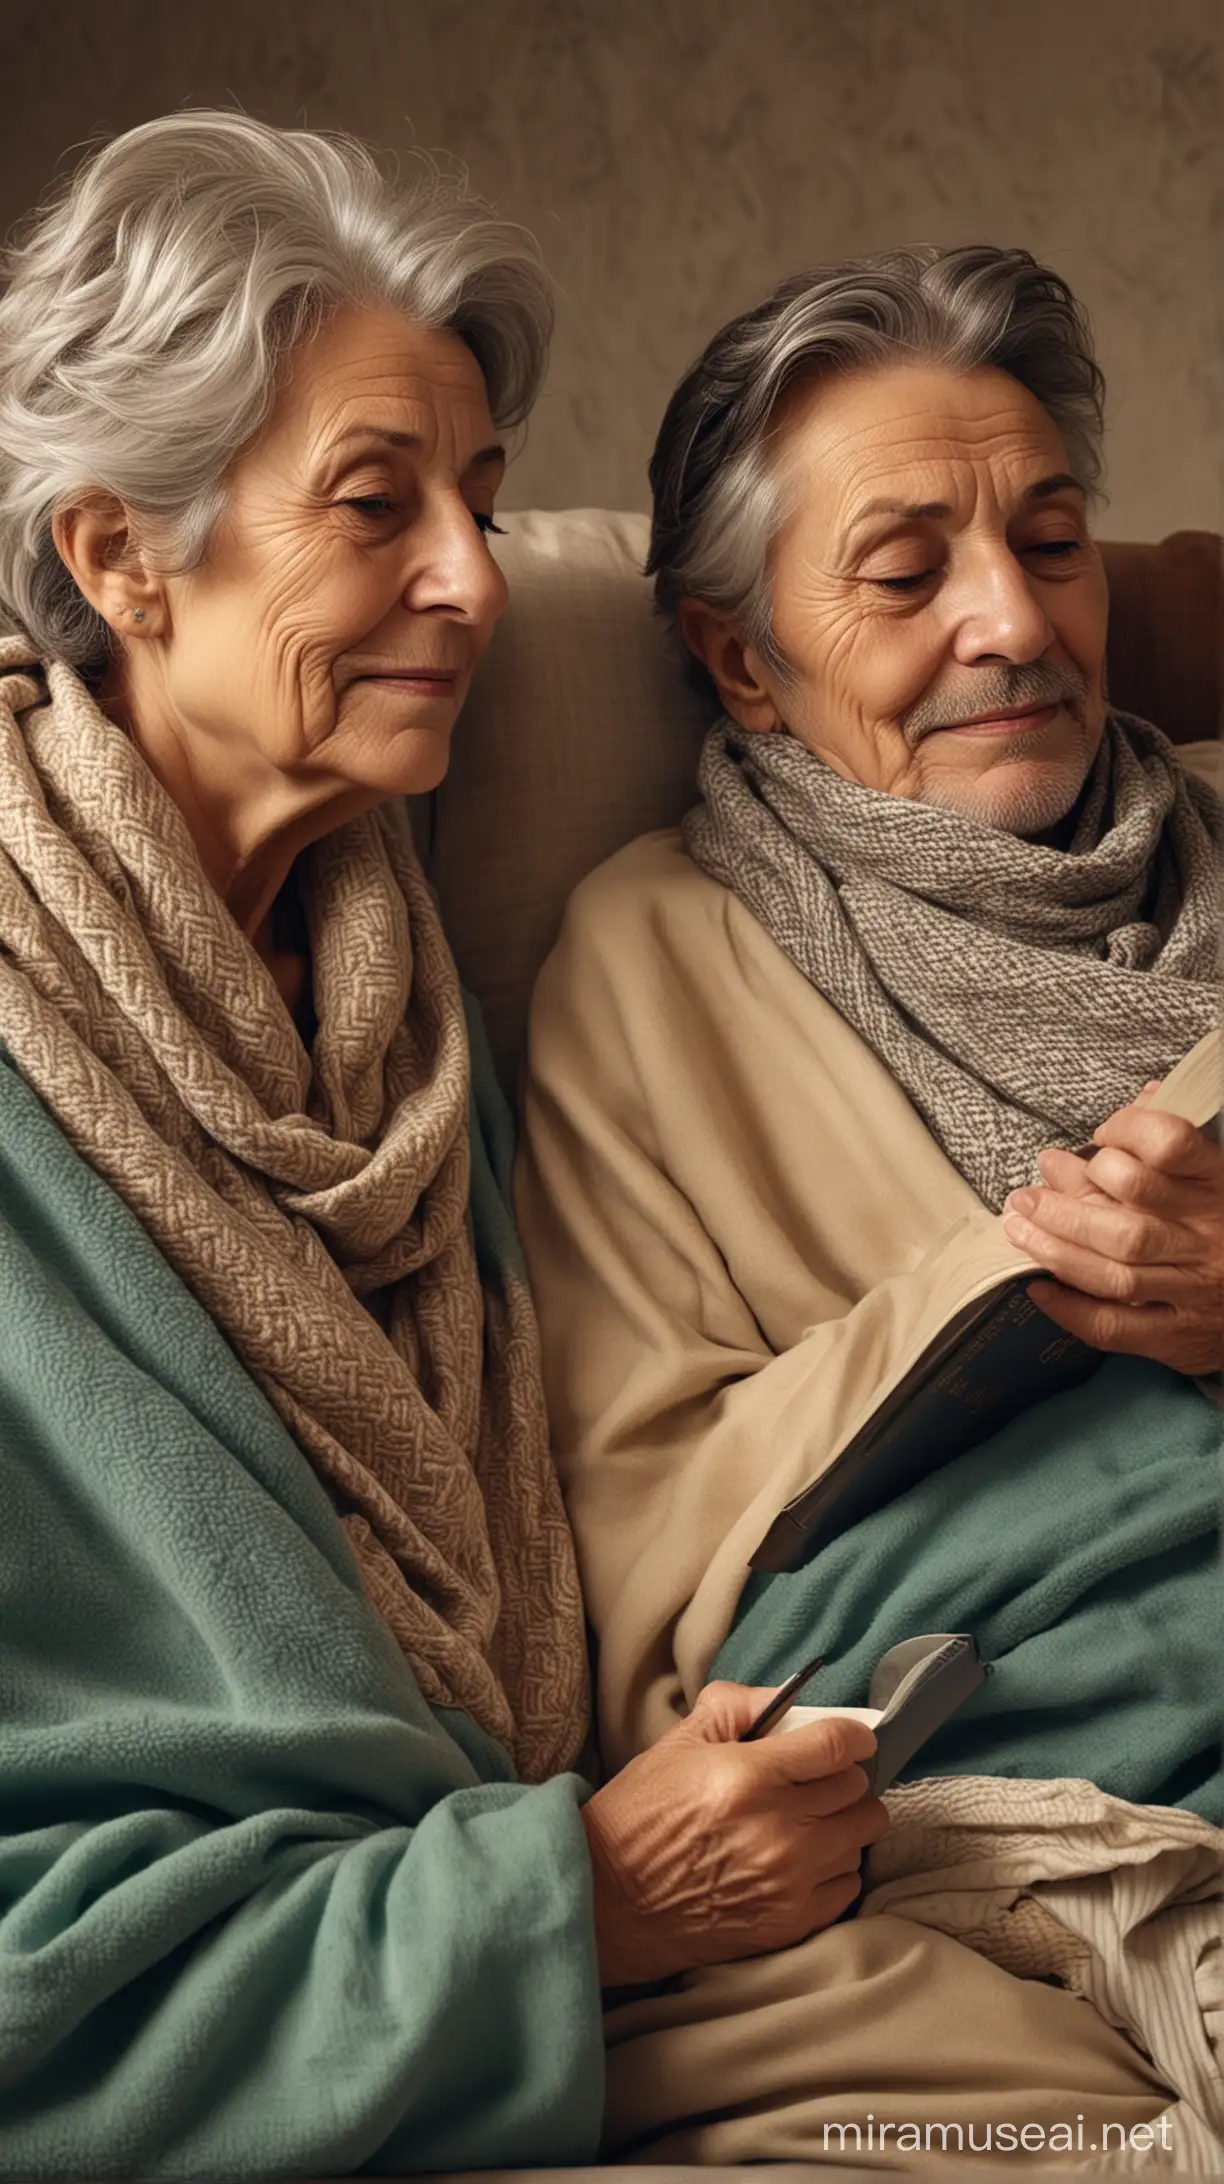 Elderly Italian Couple Bible Reading on Oversized Comfortable Couch